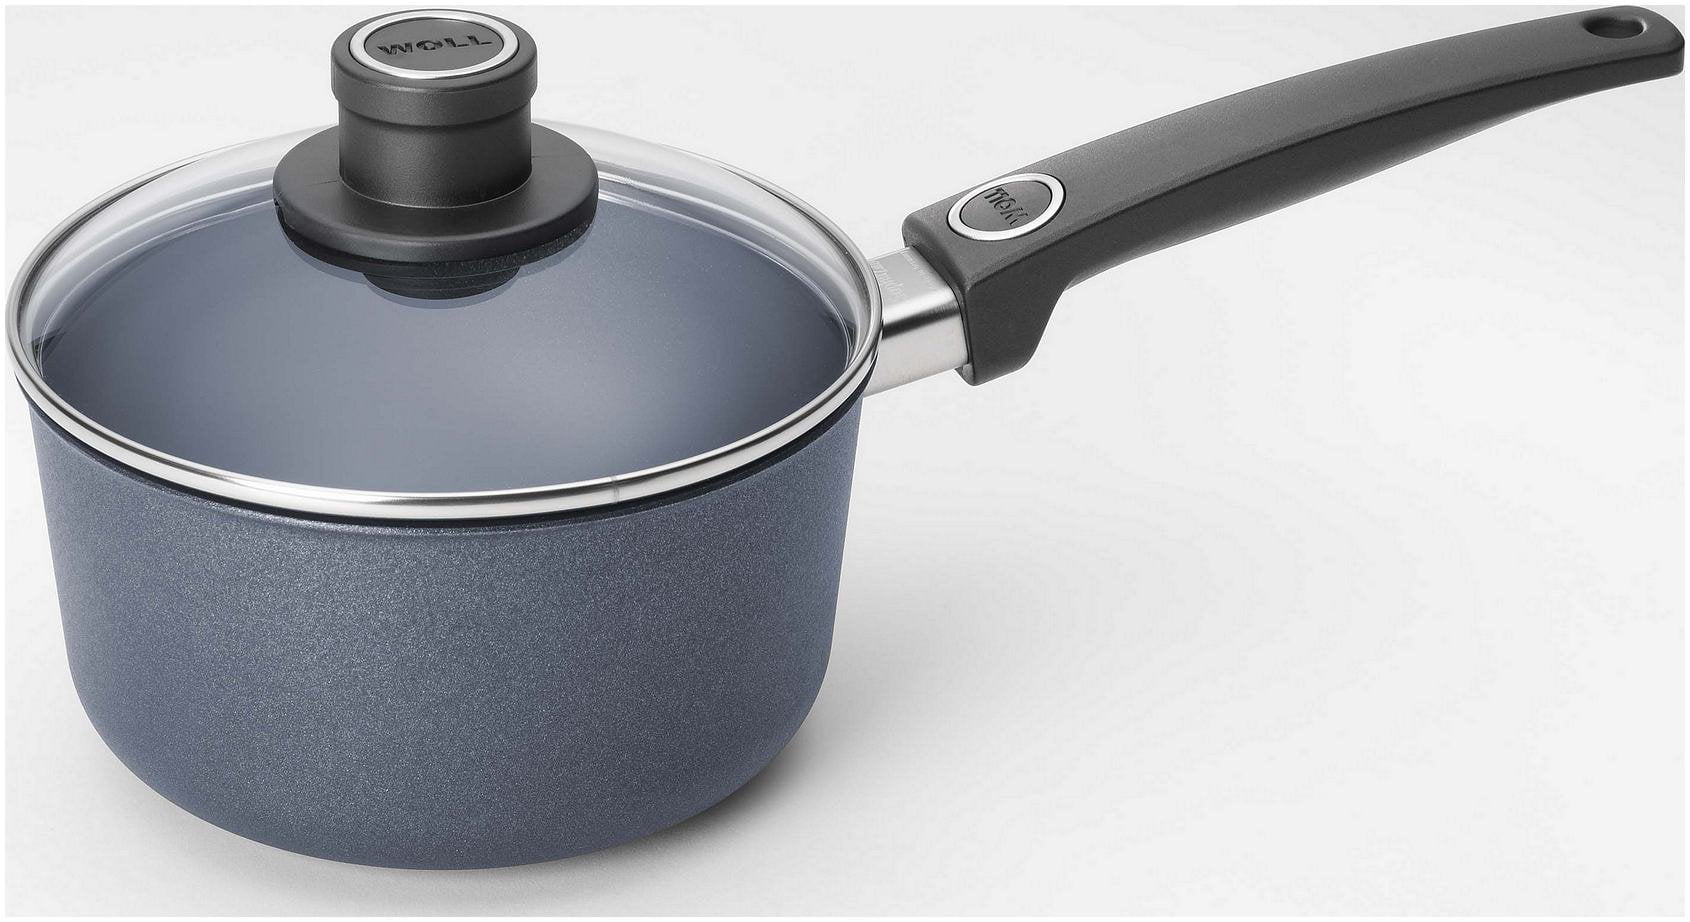 Kuhn Rikon Duromatic Stainless-Steel Pressure Cooker 2pc Set 2Qt Fry Pan & 5-Qt Saucepan 